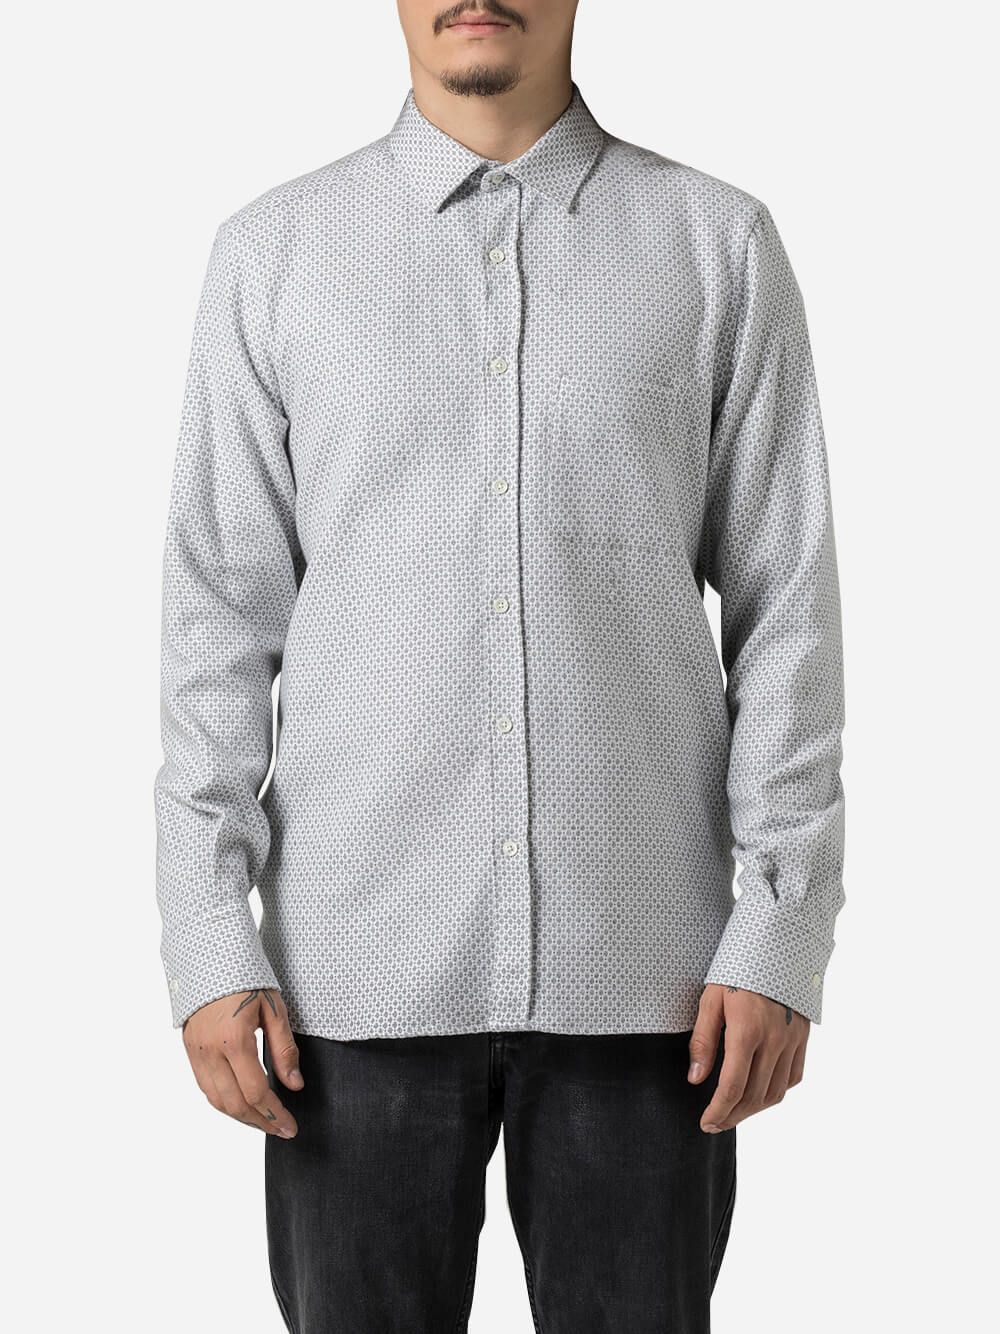 Weekend Grey Plus Shirt | The Board